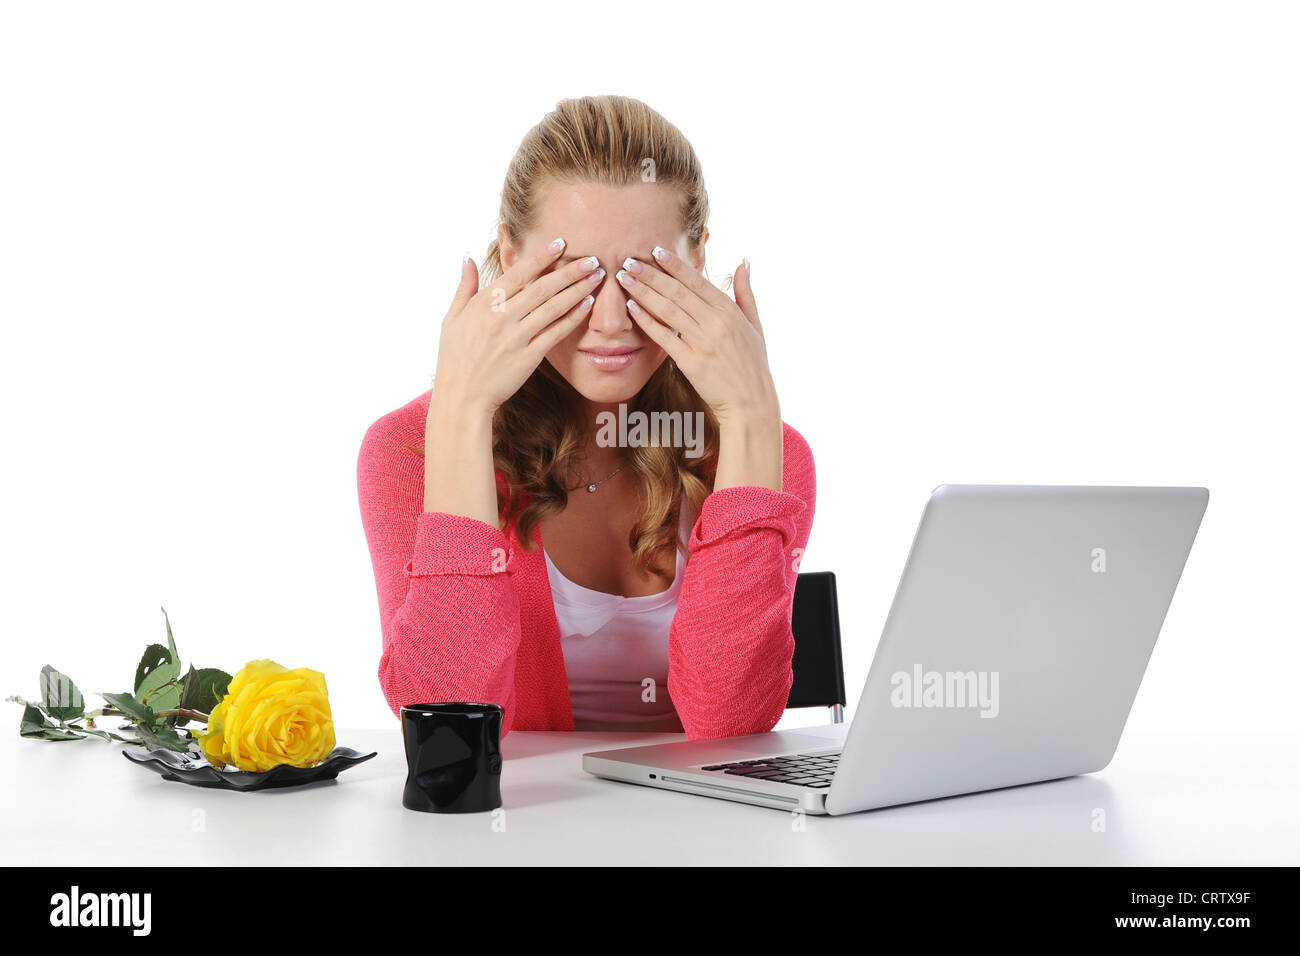 Weeping woman at a computer Stock Photo